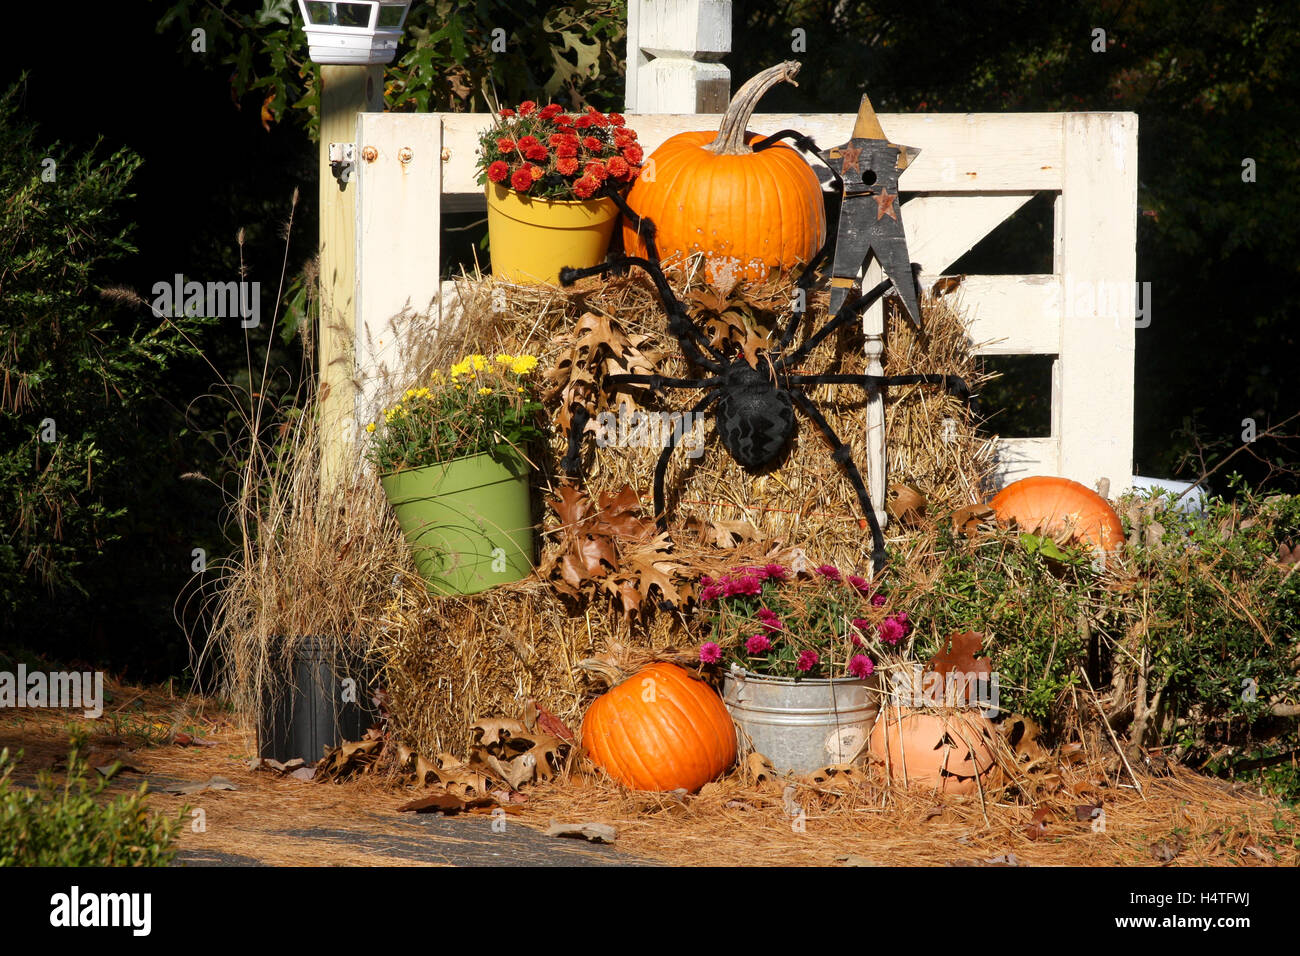 https://c8.alamy.com/comp/H4TFWJ/outdoor-fall-decoration-with-pumpkins-hay-and-flowers-H4TFWJ.jpg